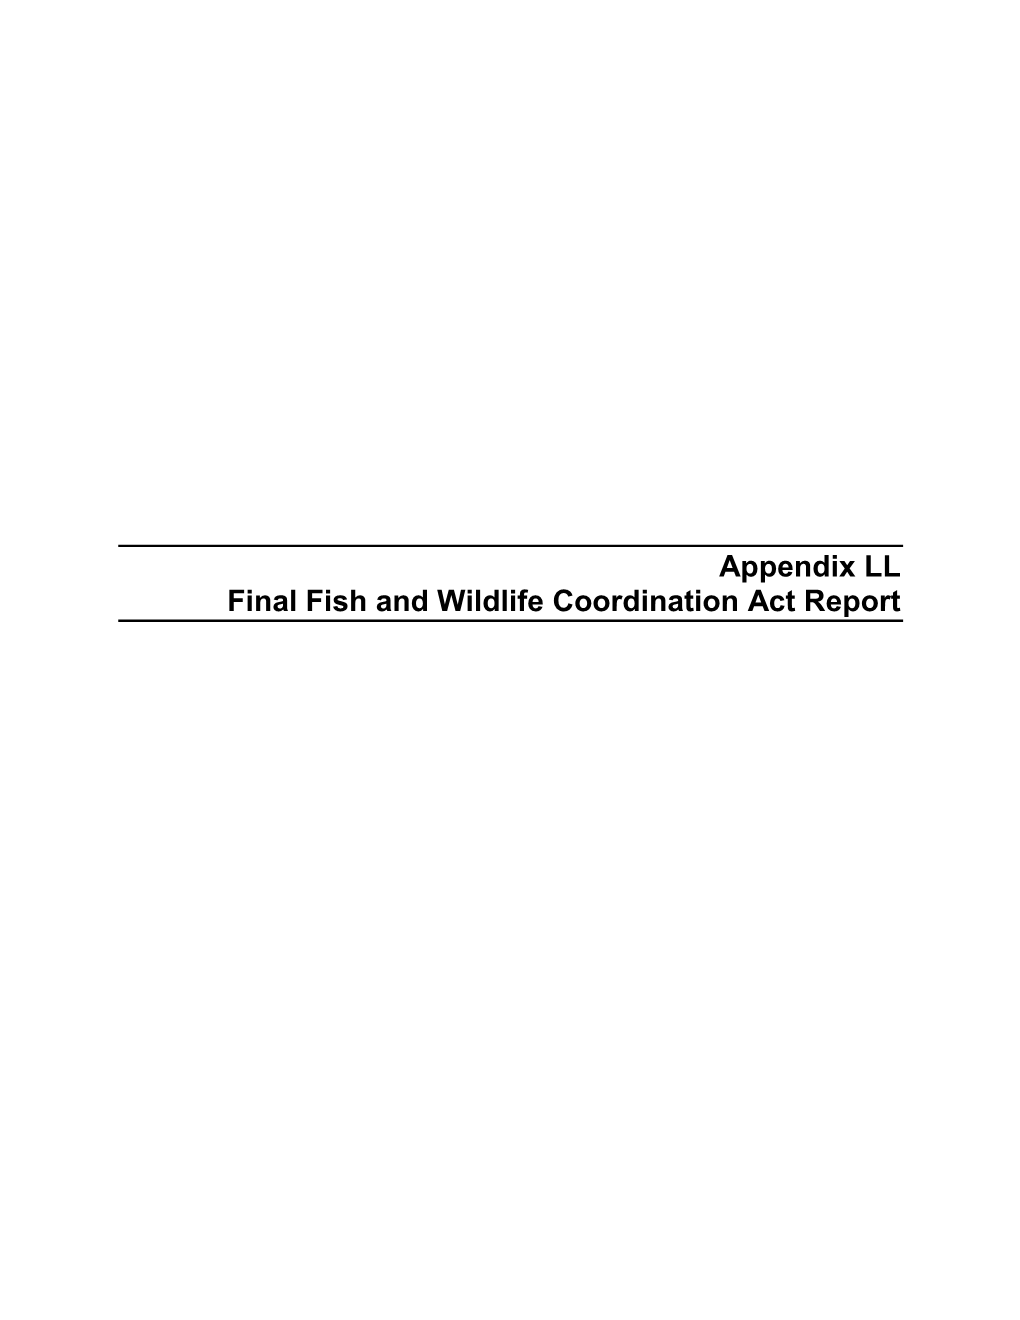 Appendix LL Final Fish and Wildlife Coordination Act Report FISH and WILDLIFE COORDINATION ACT REPORT